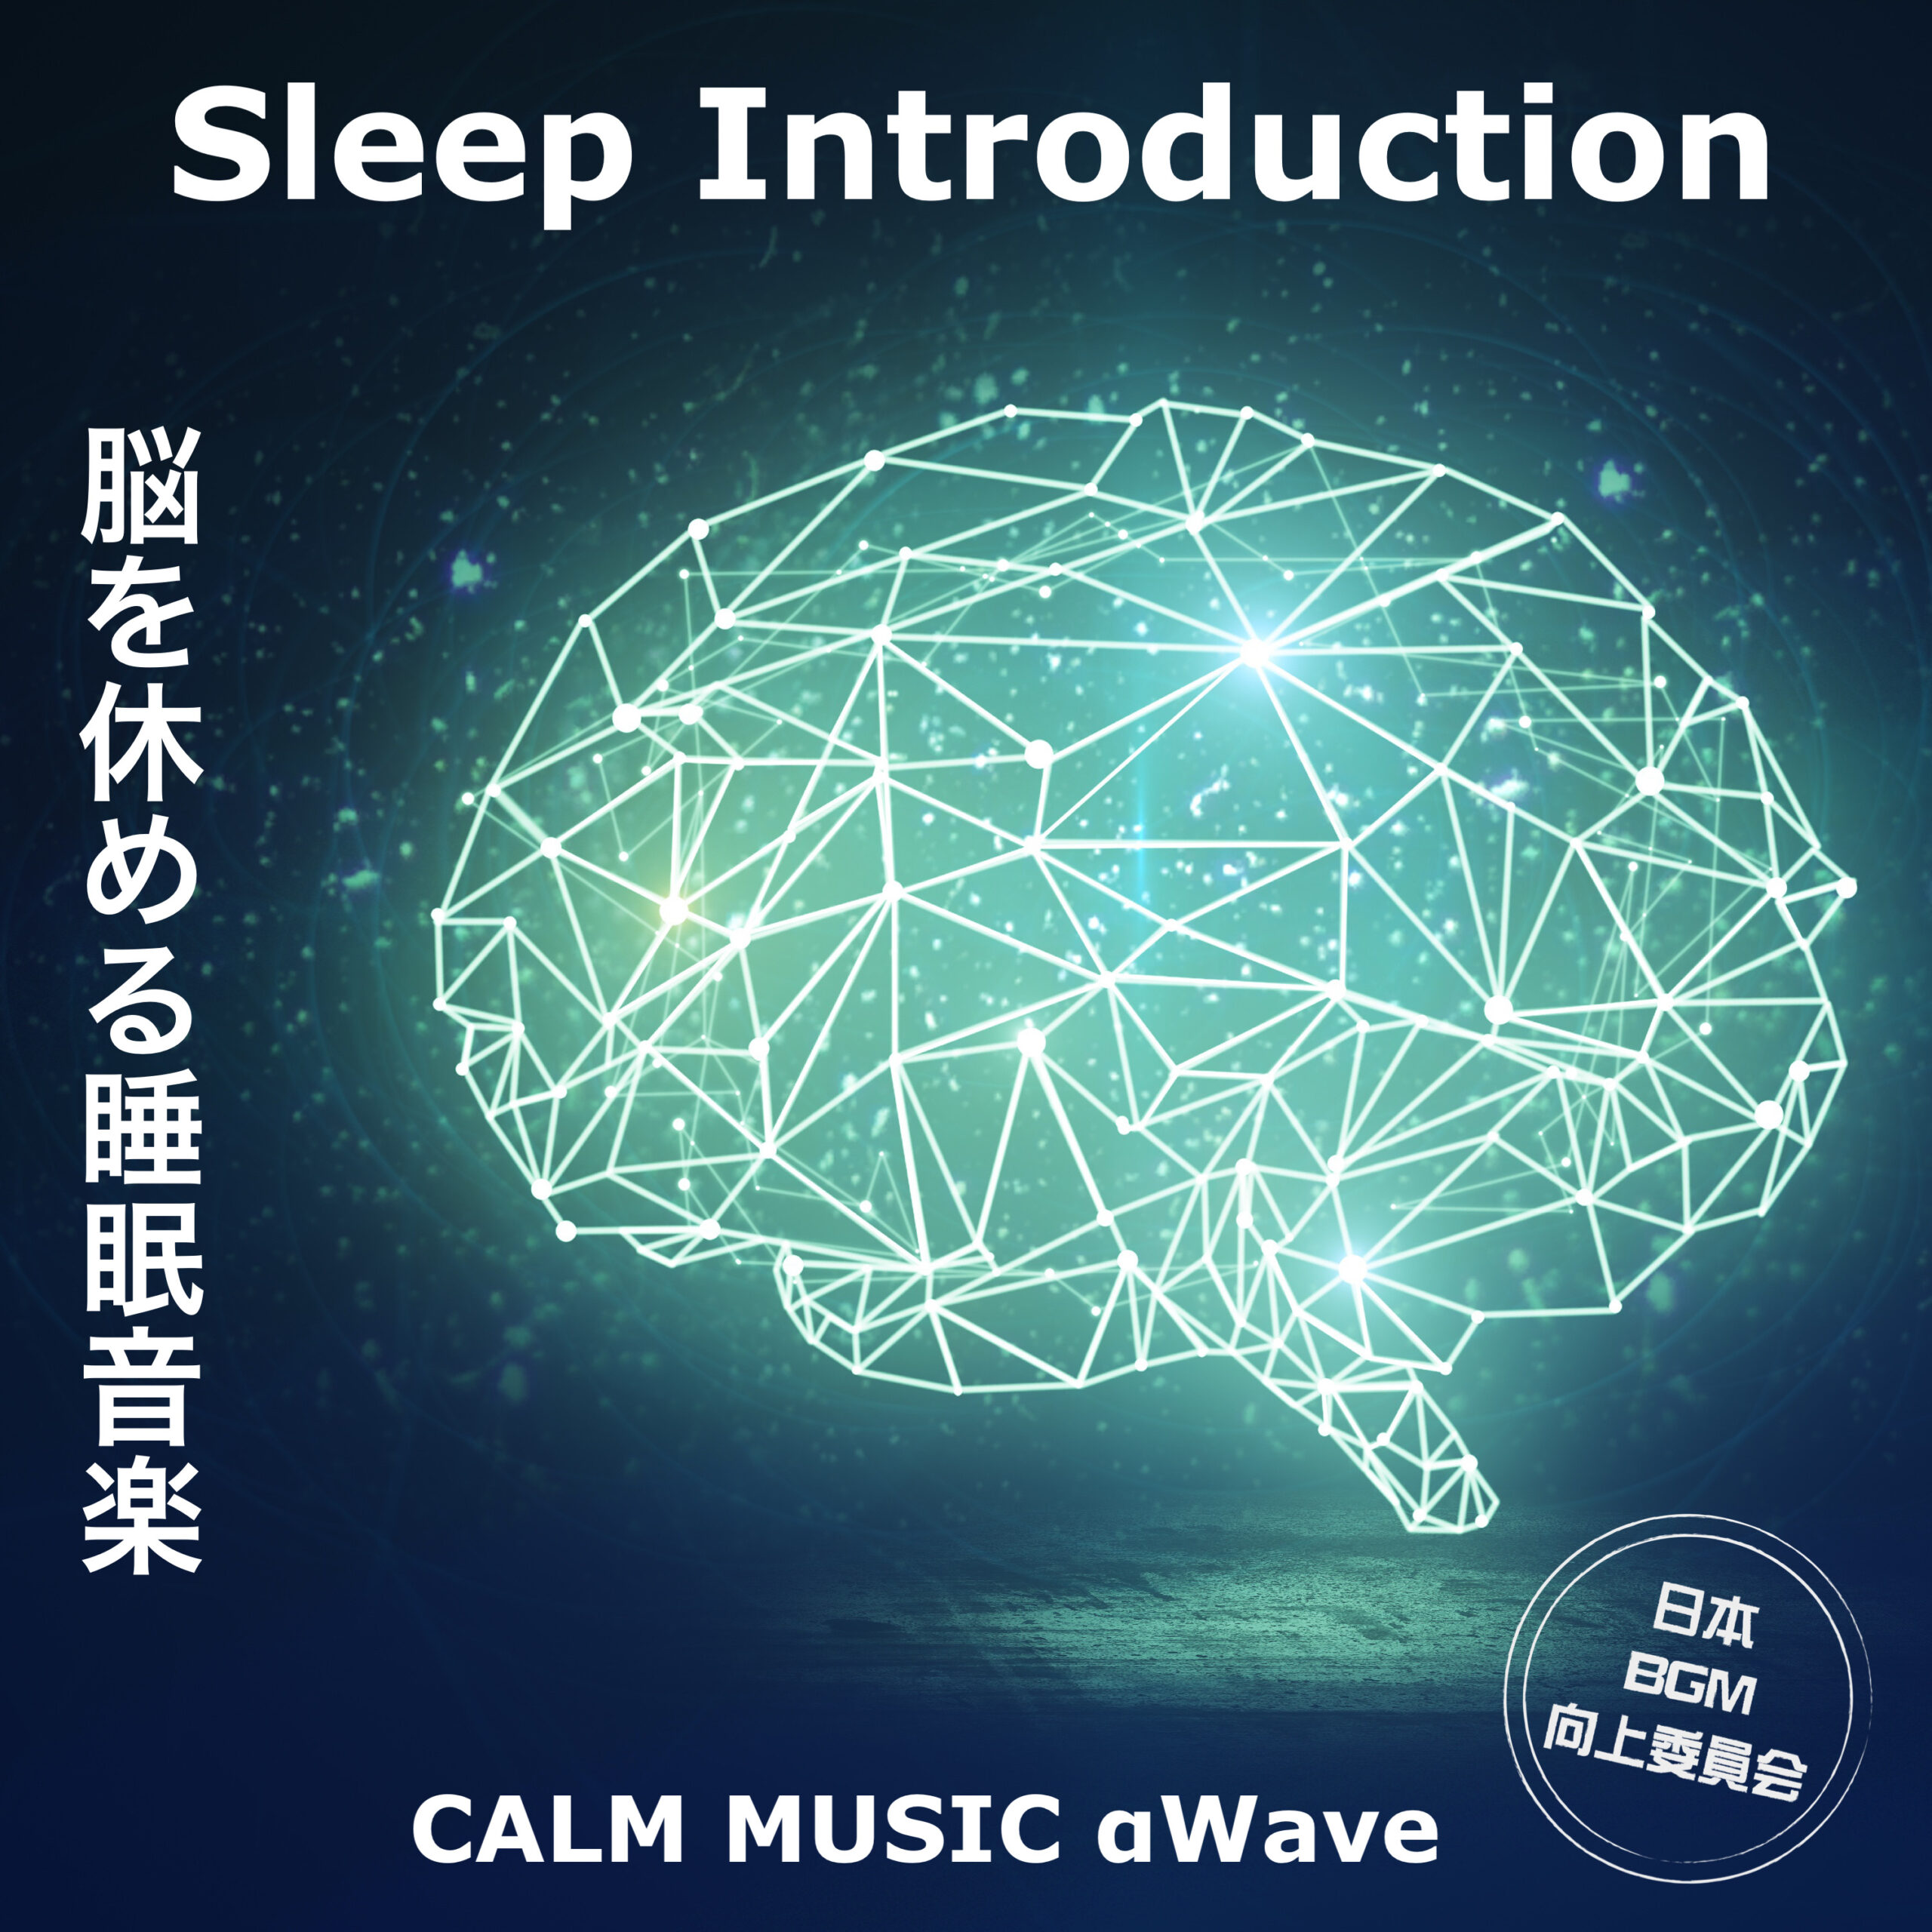 Sleep Introduction 脳を休める睡眠音楽 CALM MUSIC αwave 癒しのリラックス睡眠導入BGM